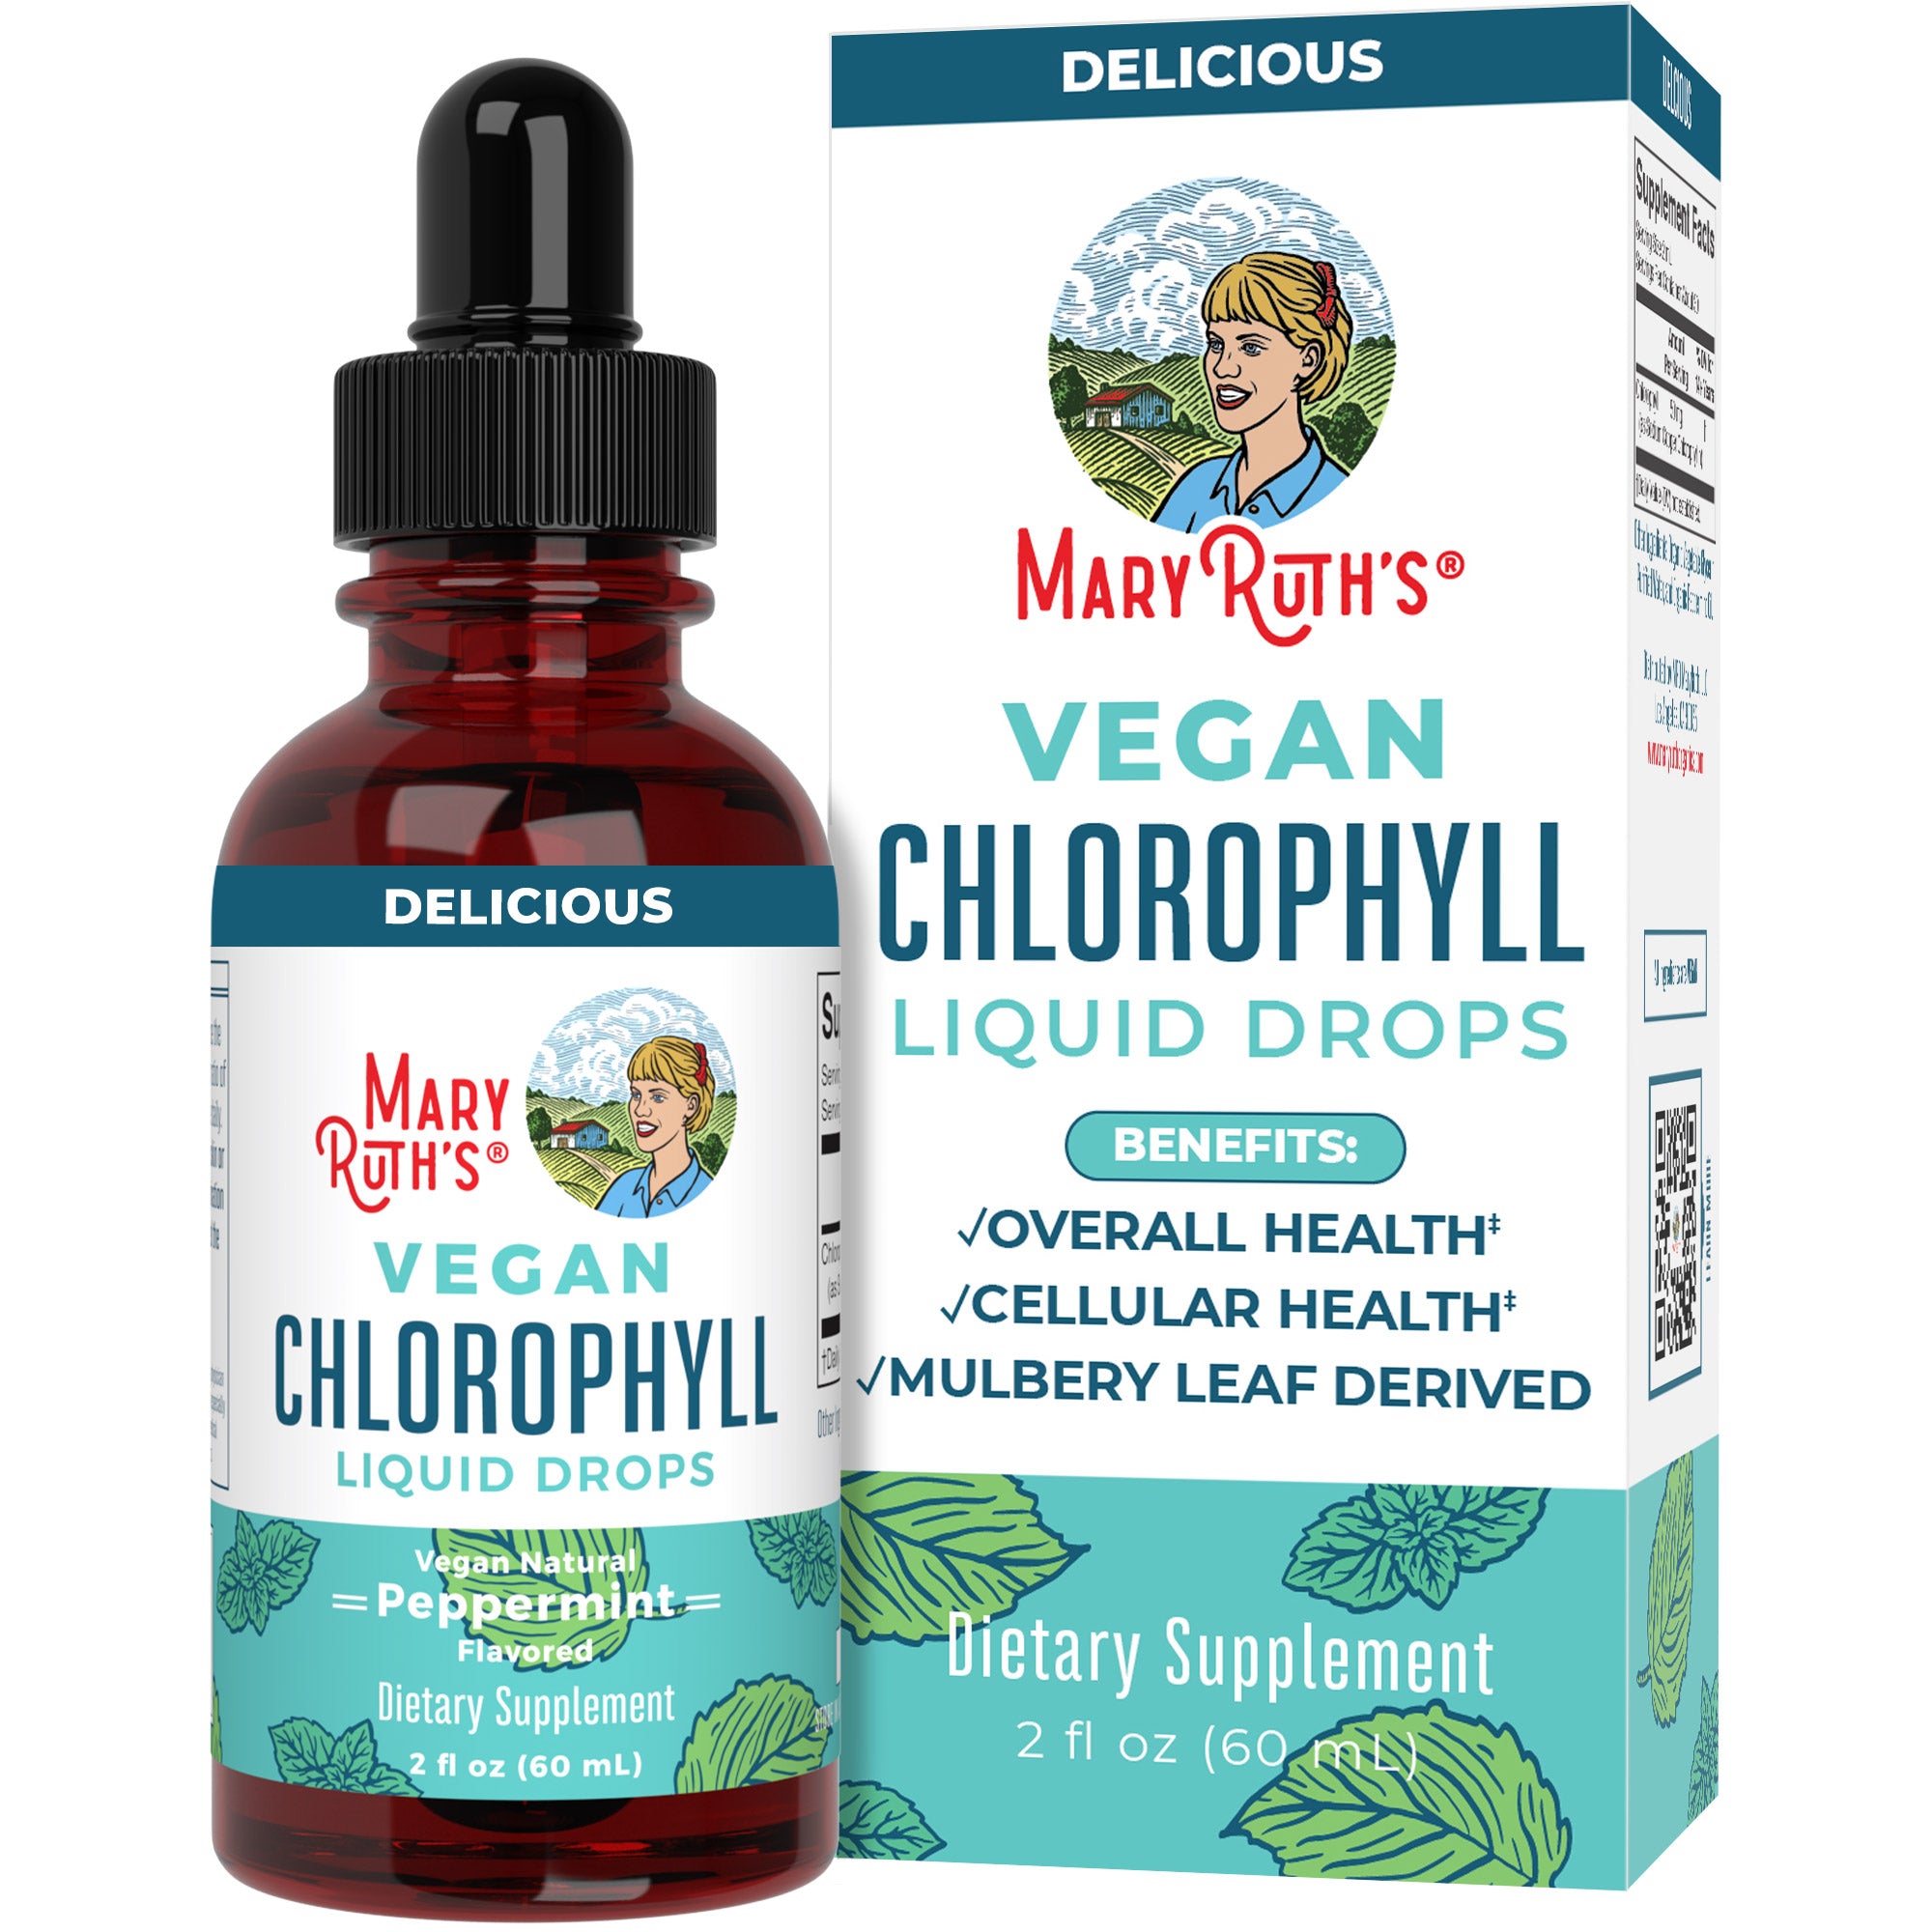 MaryRuth Vegan Chlorophyll Liquid Drops Peppermint Flavor Product Image Bottle + Box